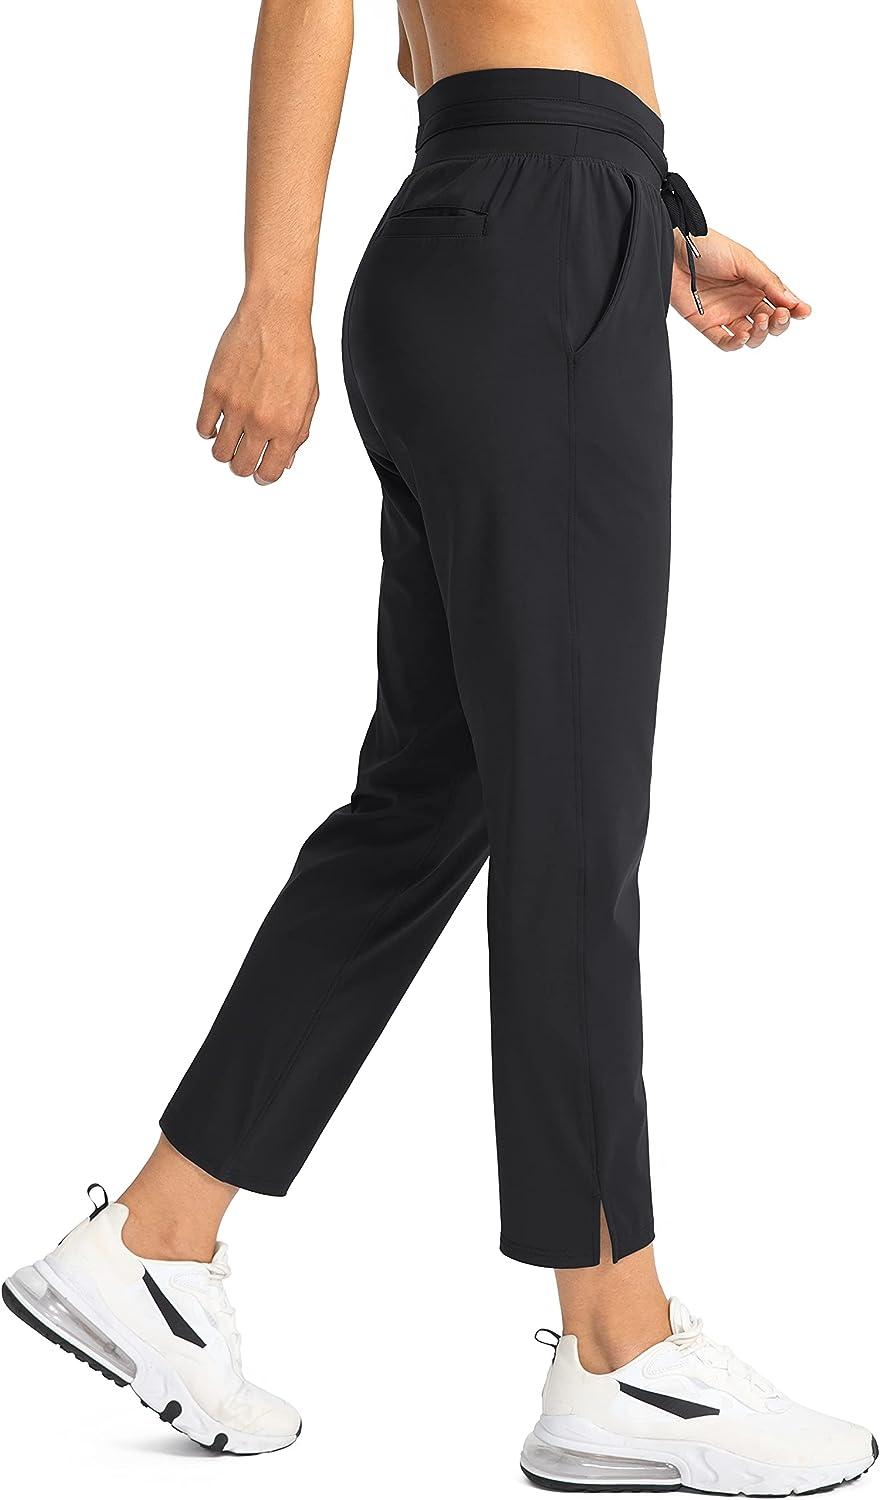 lululemon athletica Spandex Dress Pants for Women